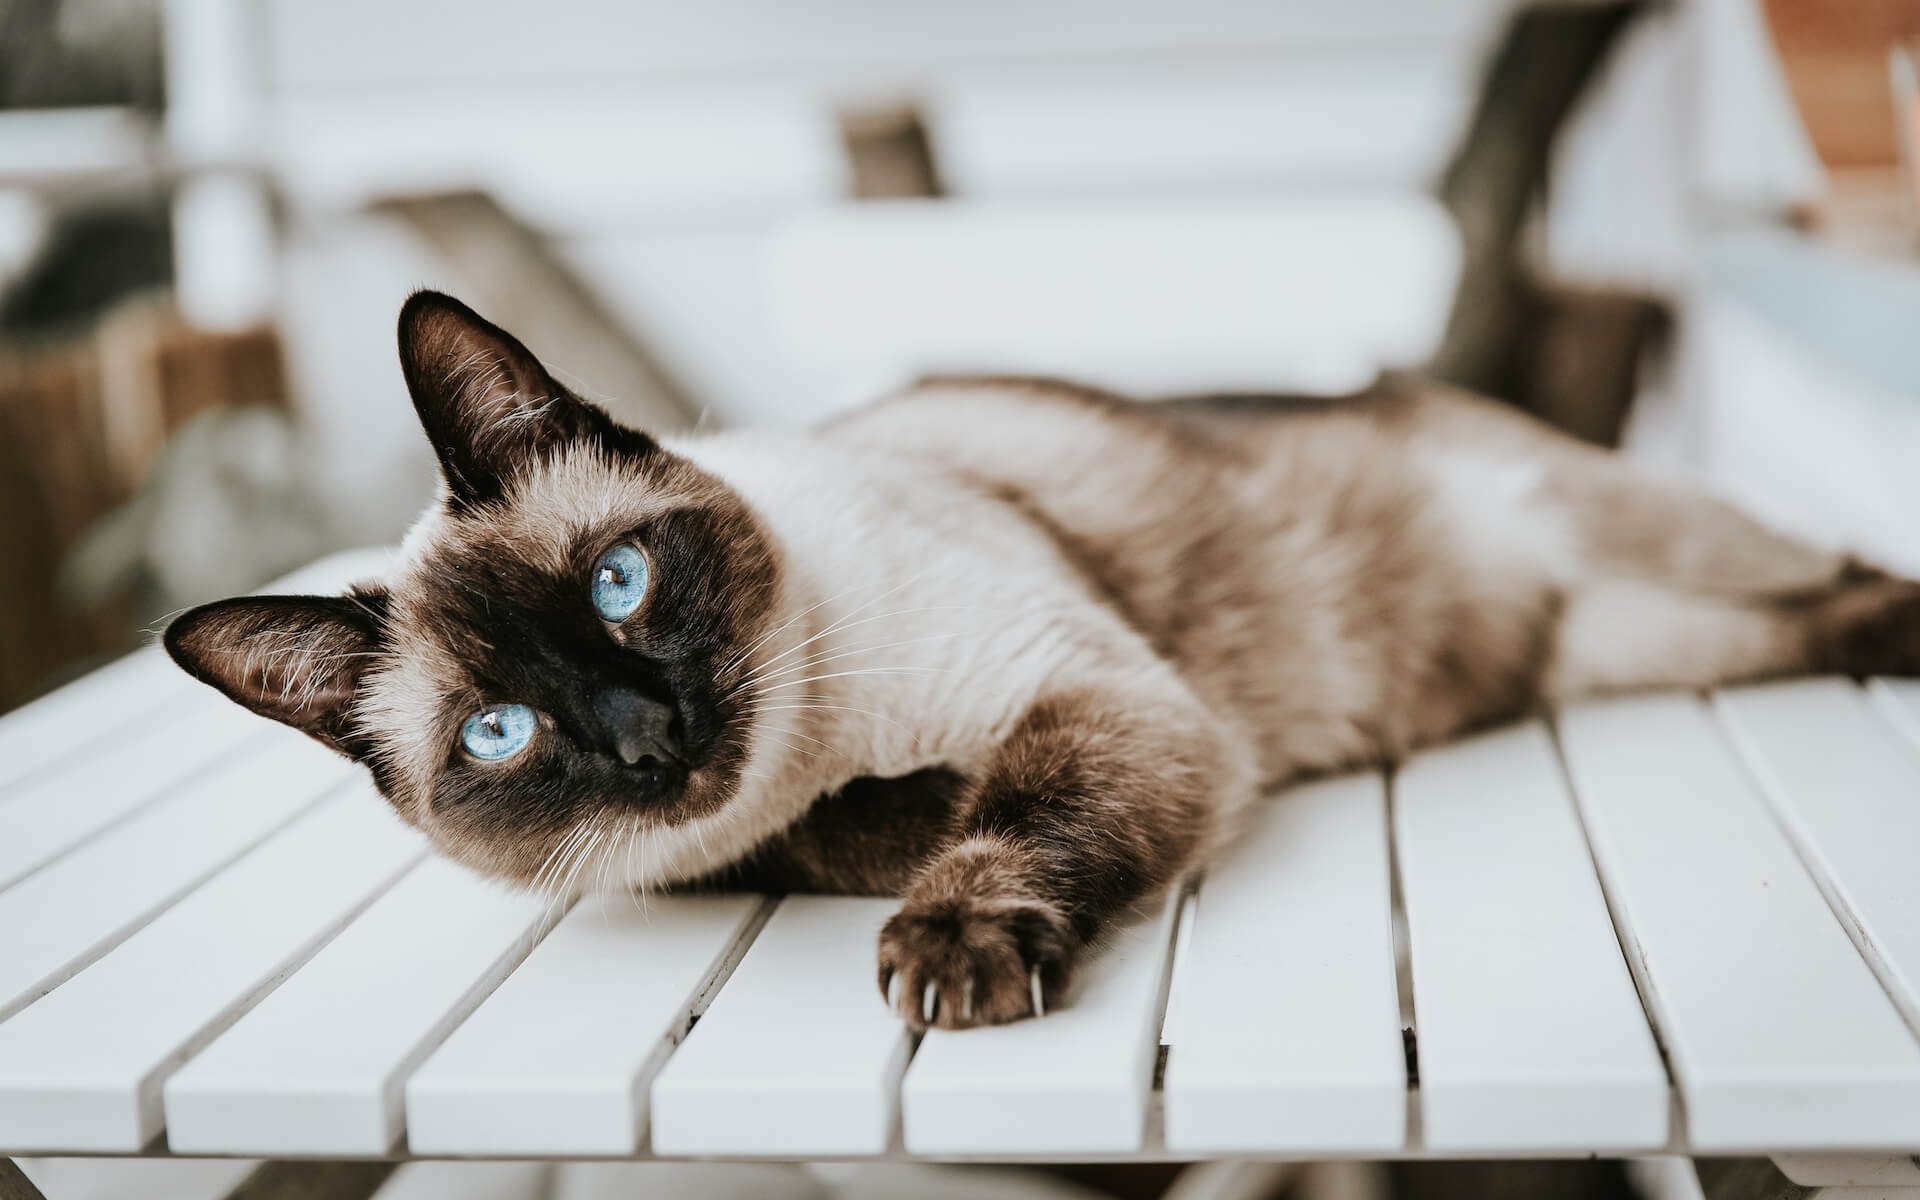 An elegant Siamese cat with striking blue eyes.